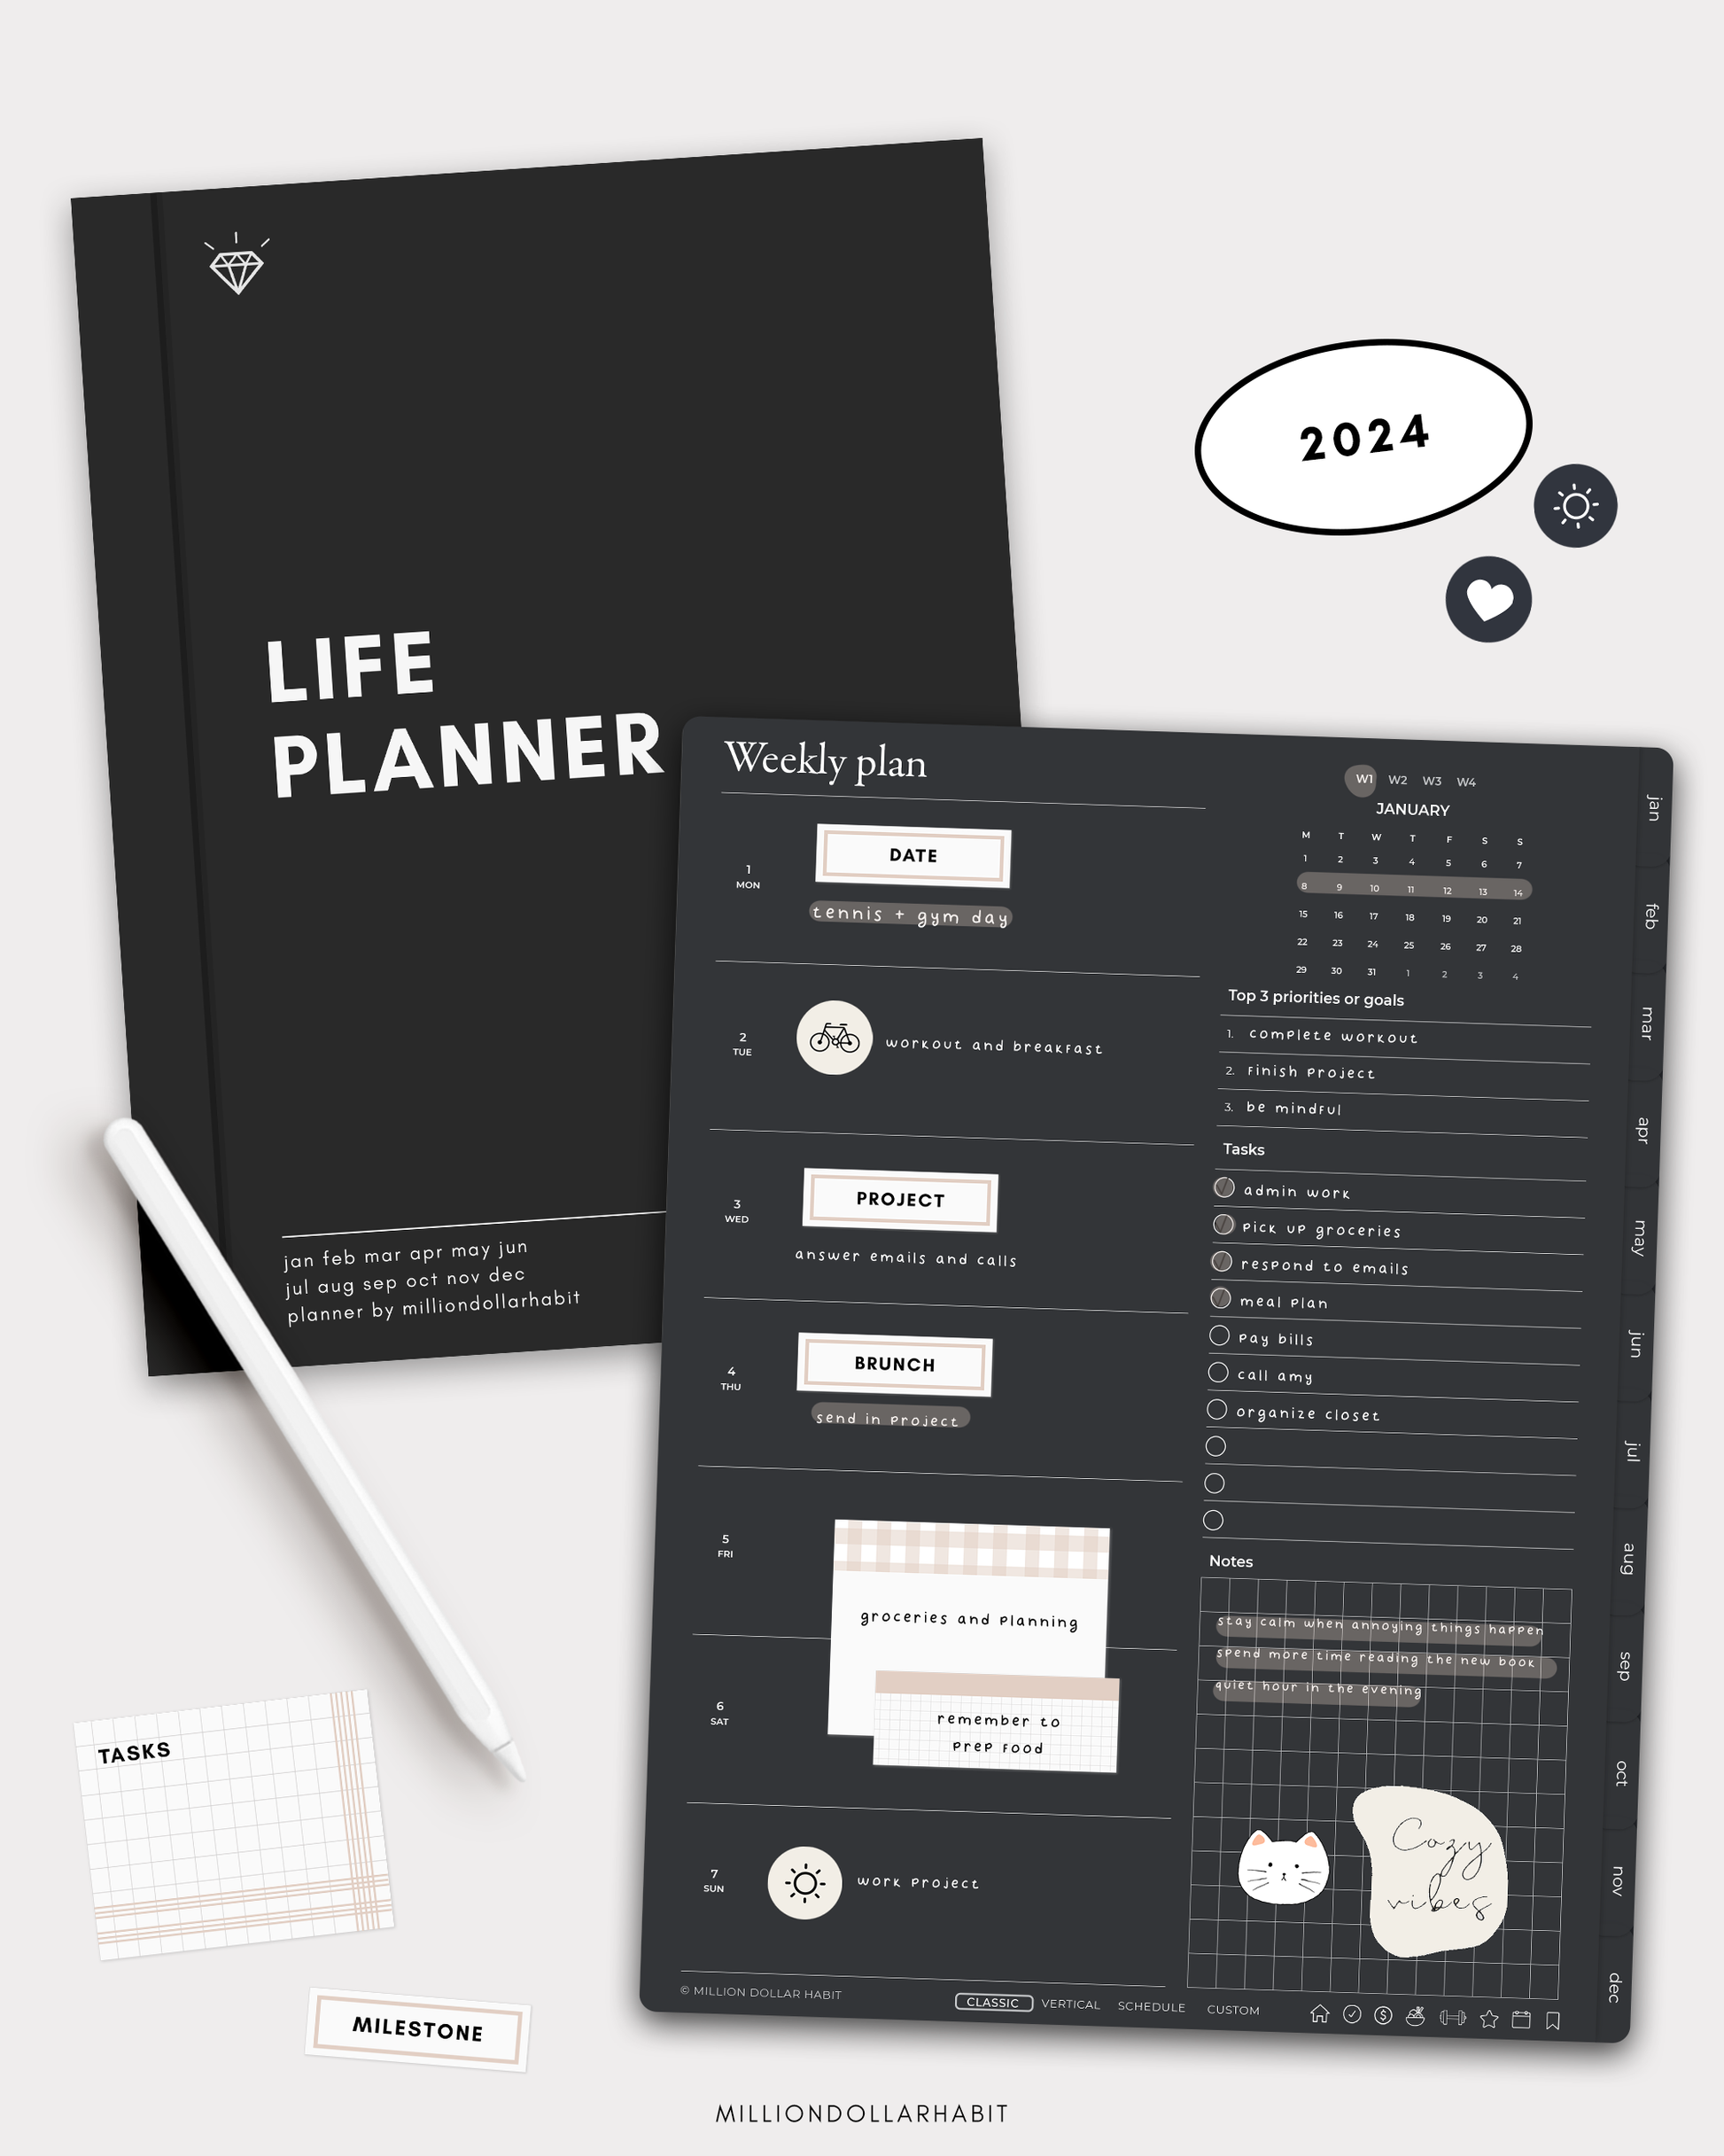 2024 Minimal Life Planner